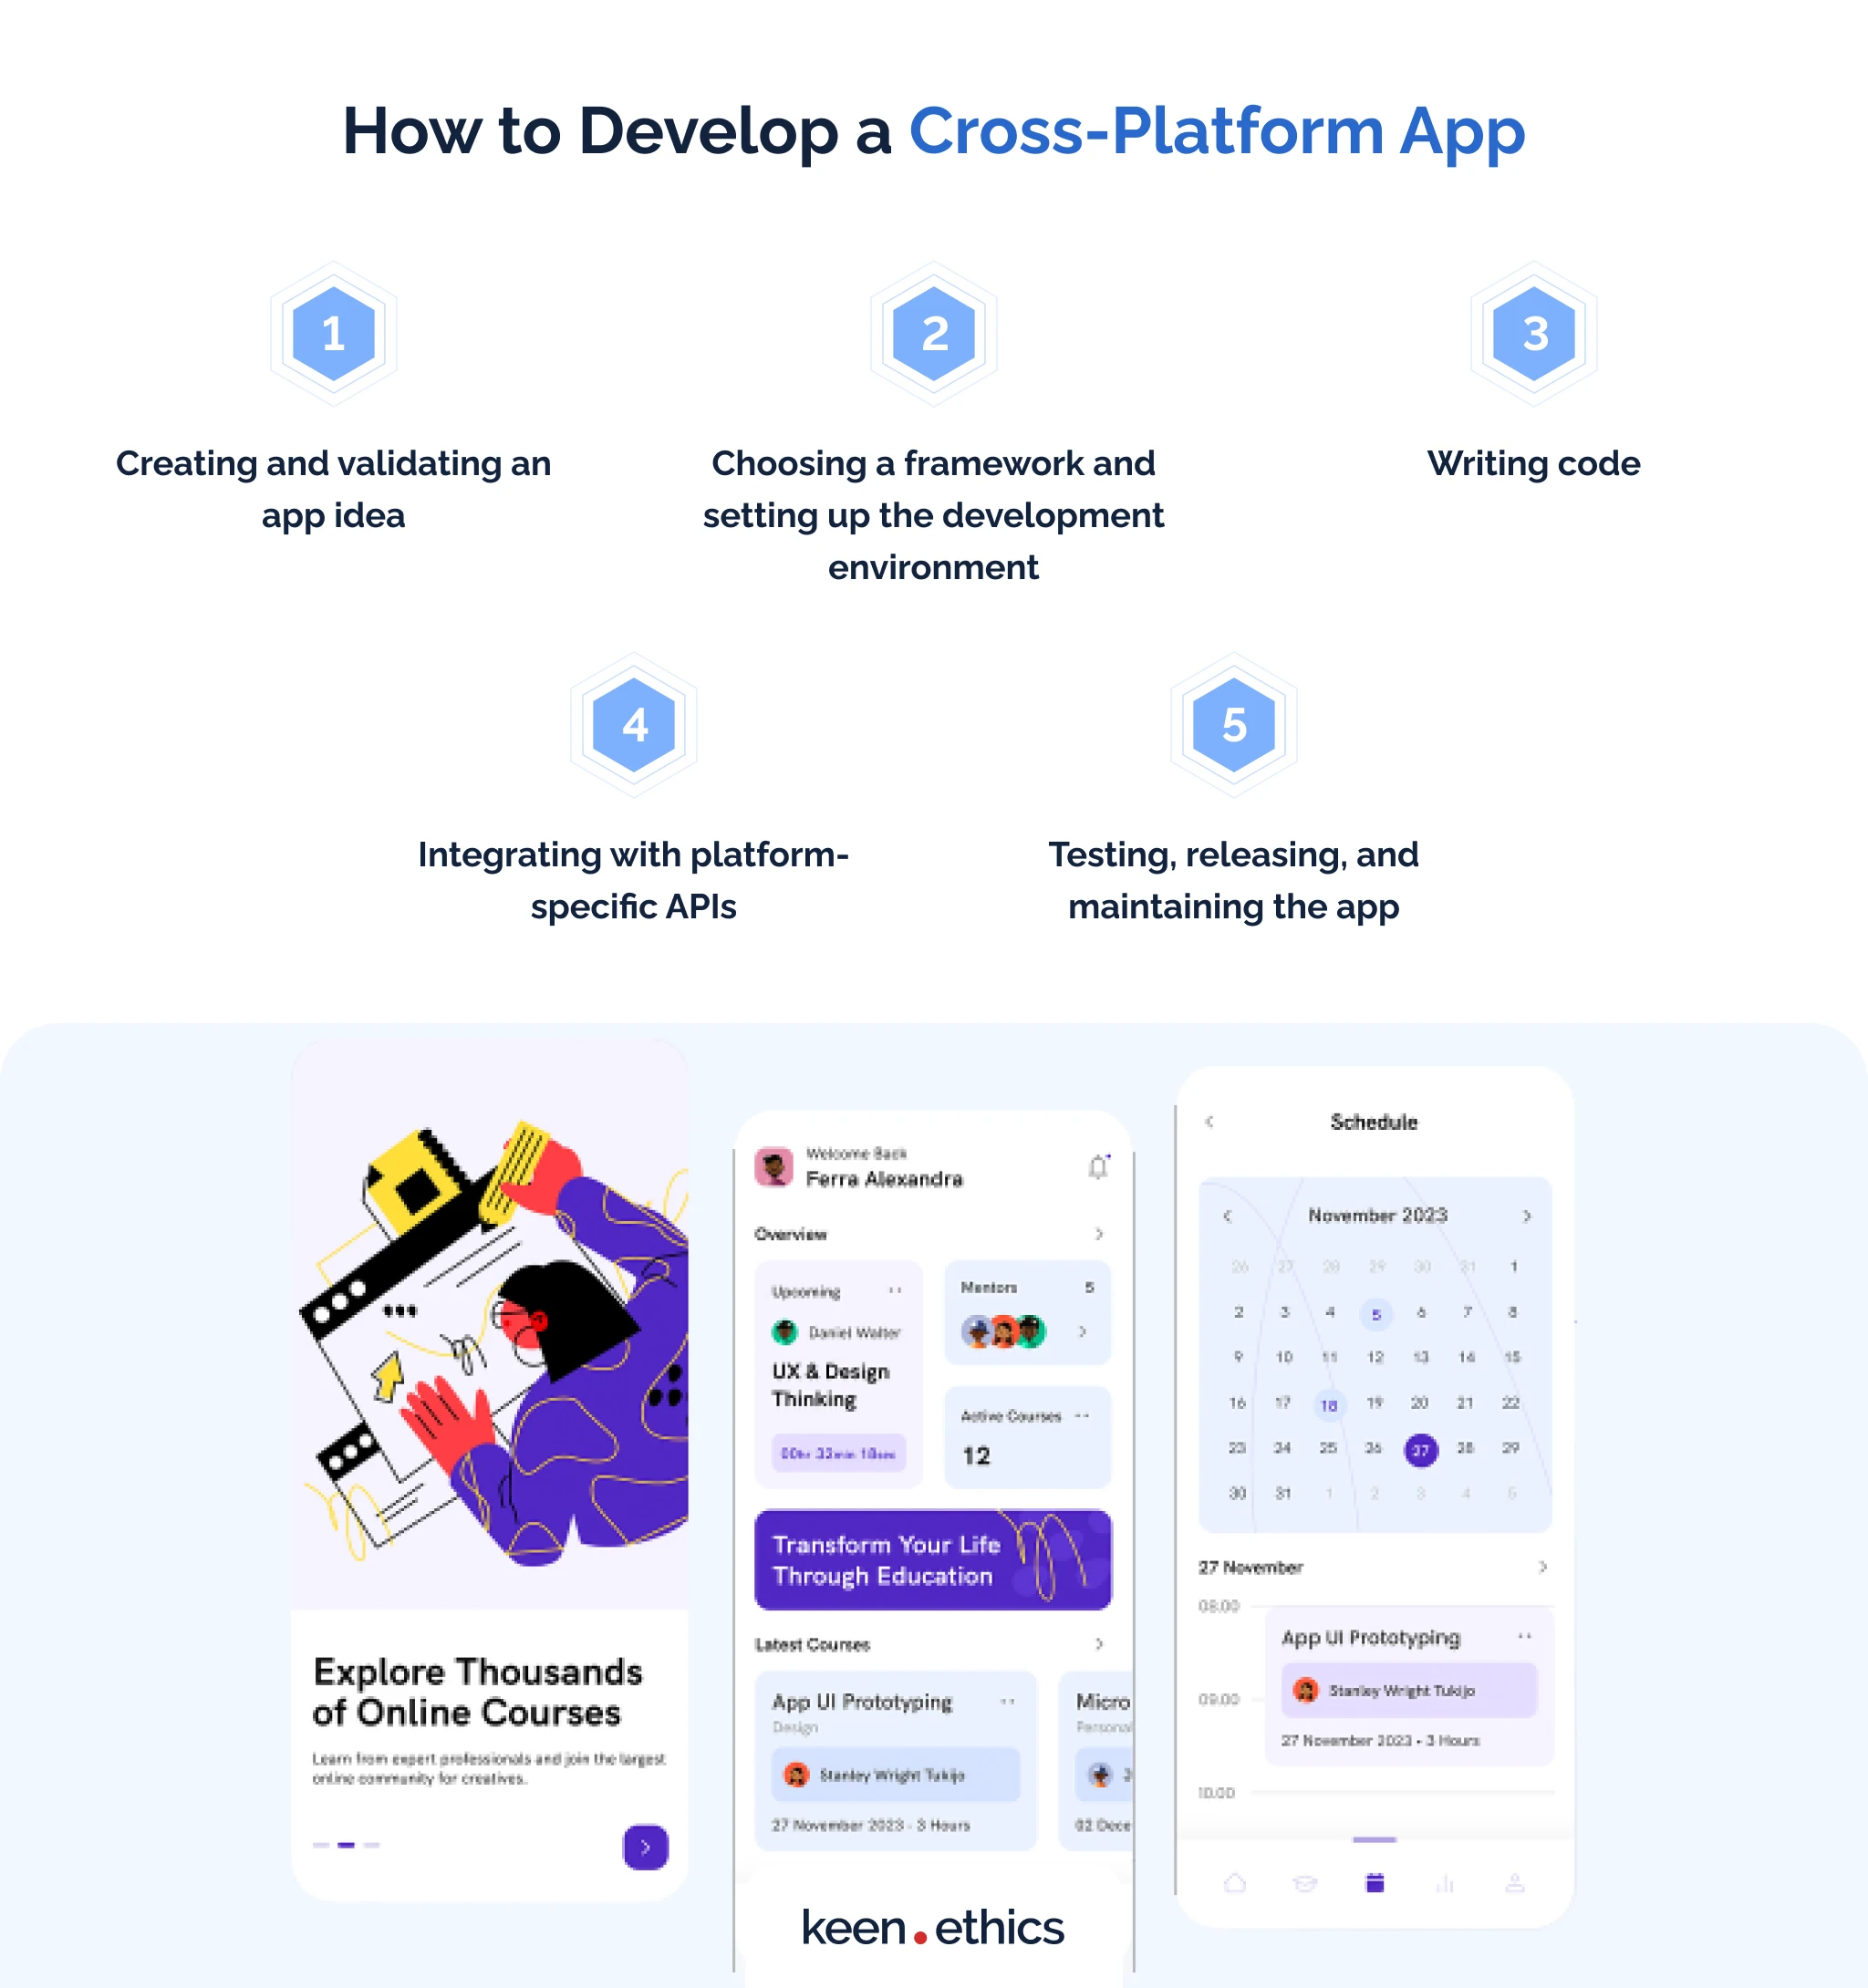 How to develop a cross-platform app